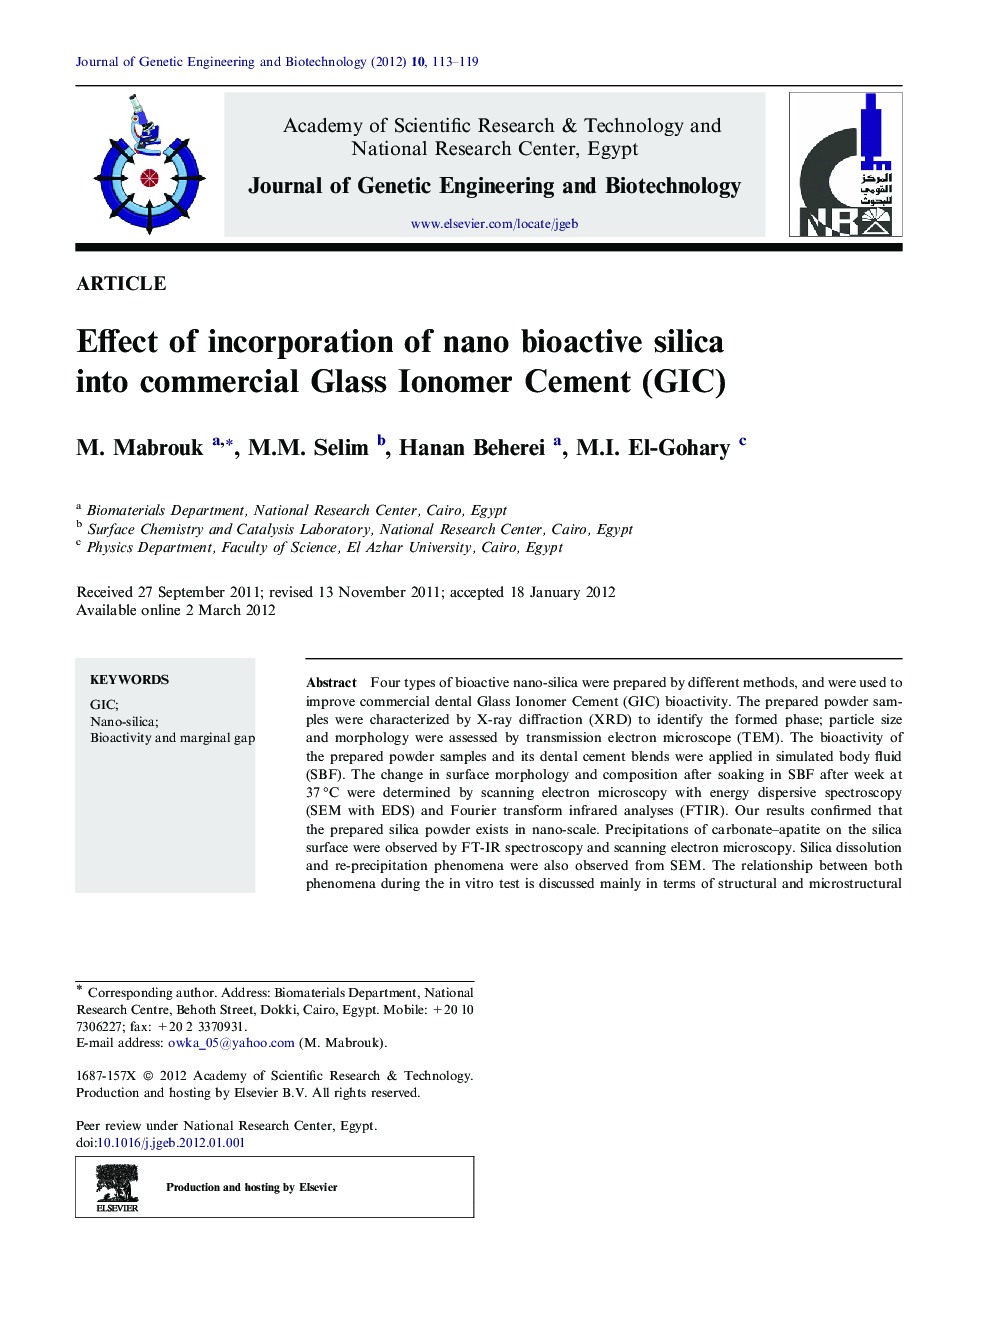 Effect of incorporation of nano bioactive silica into commercial Glass Ionomer Cement (GIC)